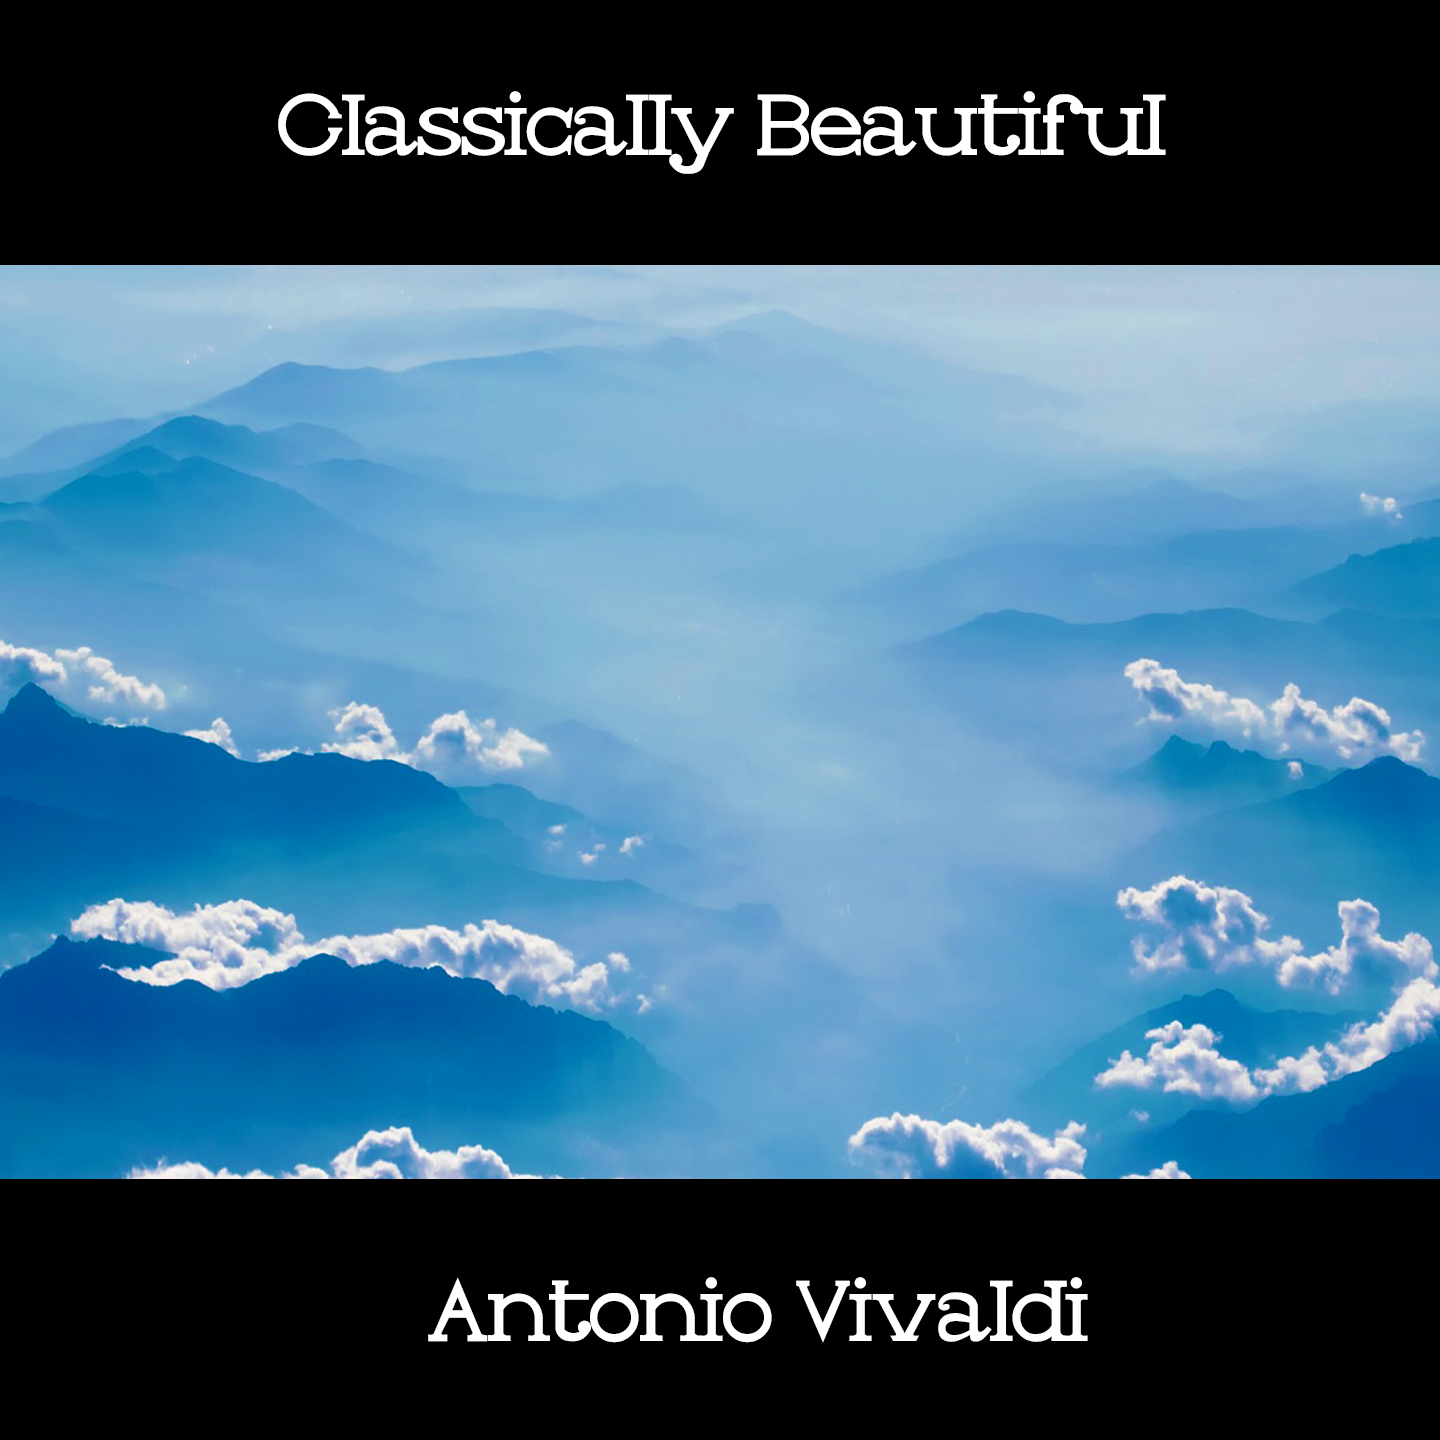 Classically Beautiful Antonio Vivaldi